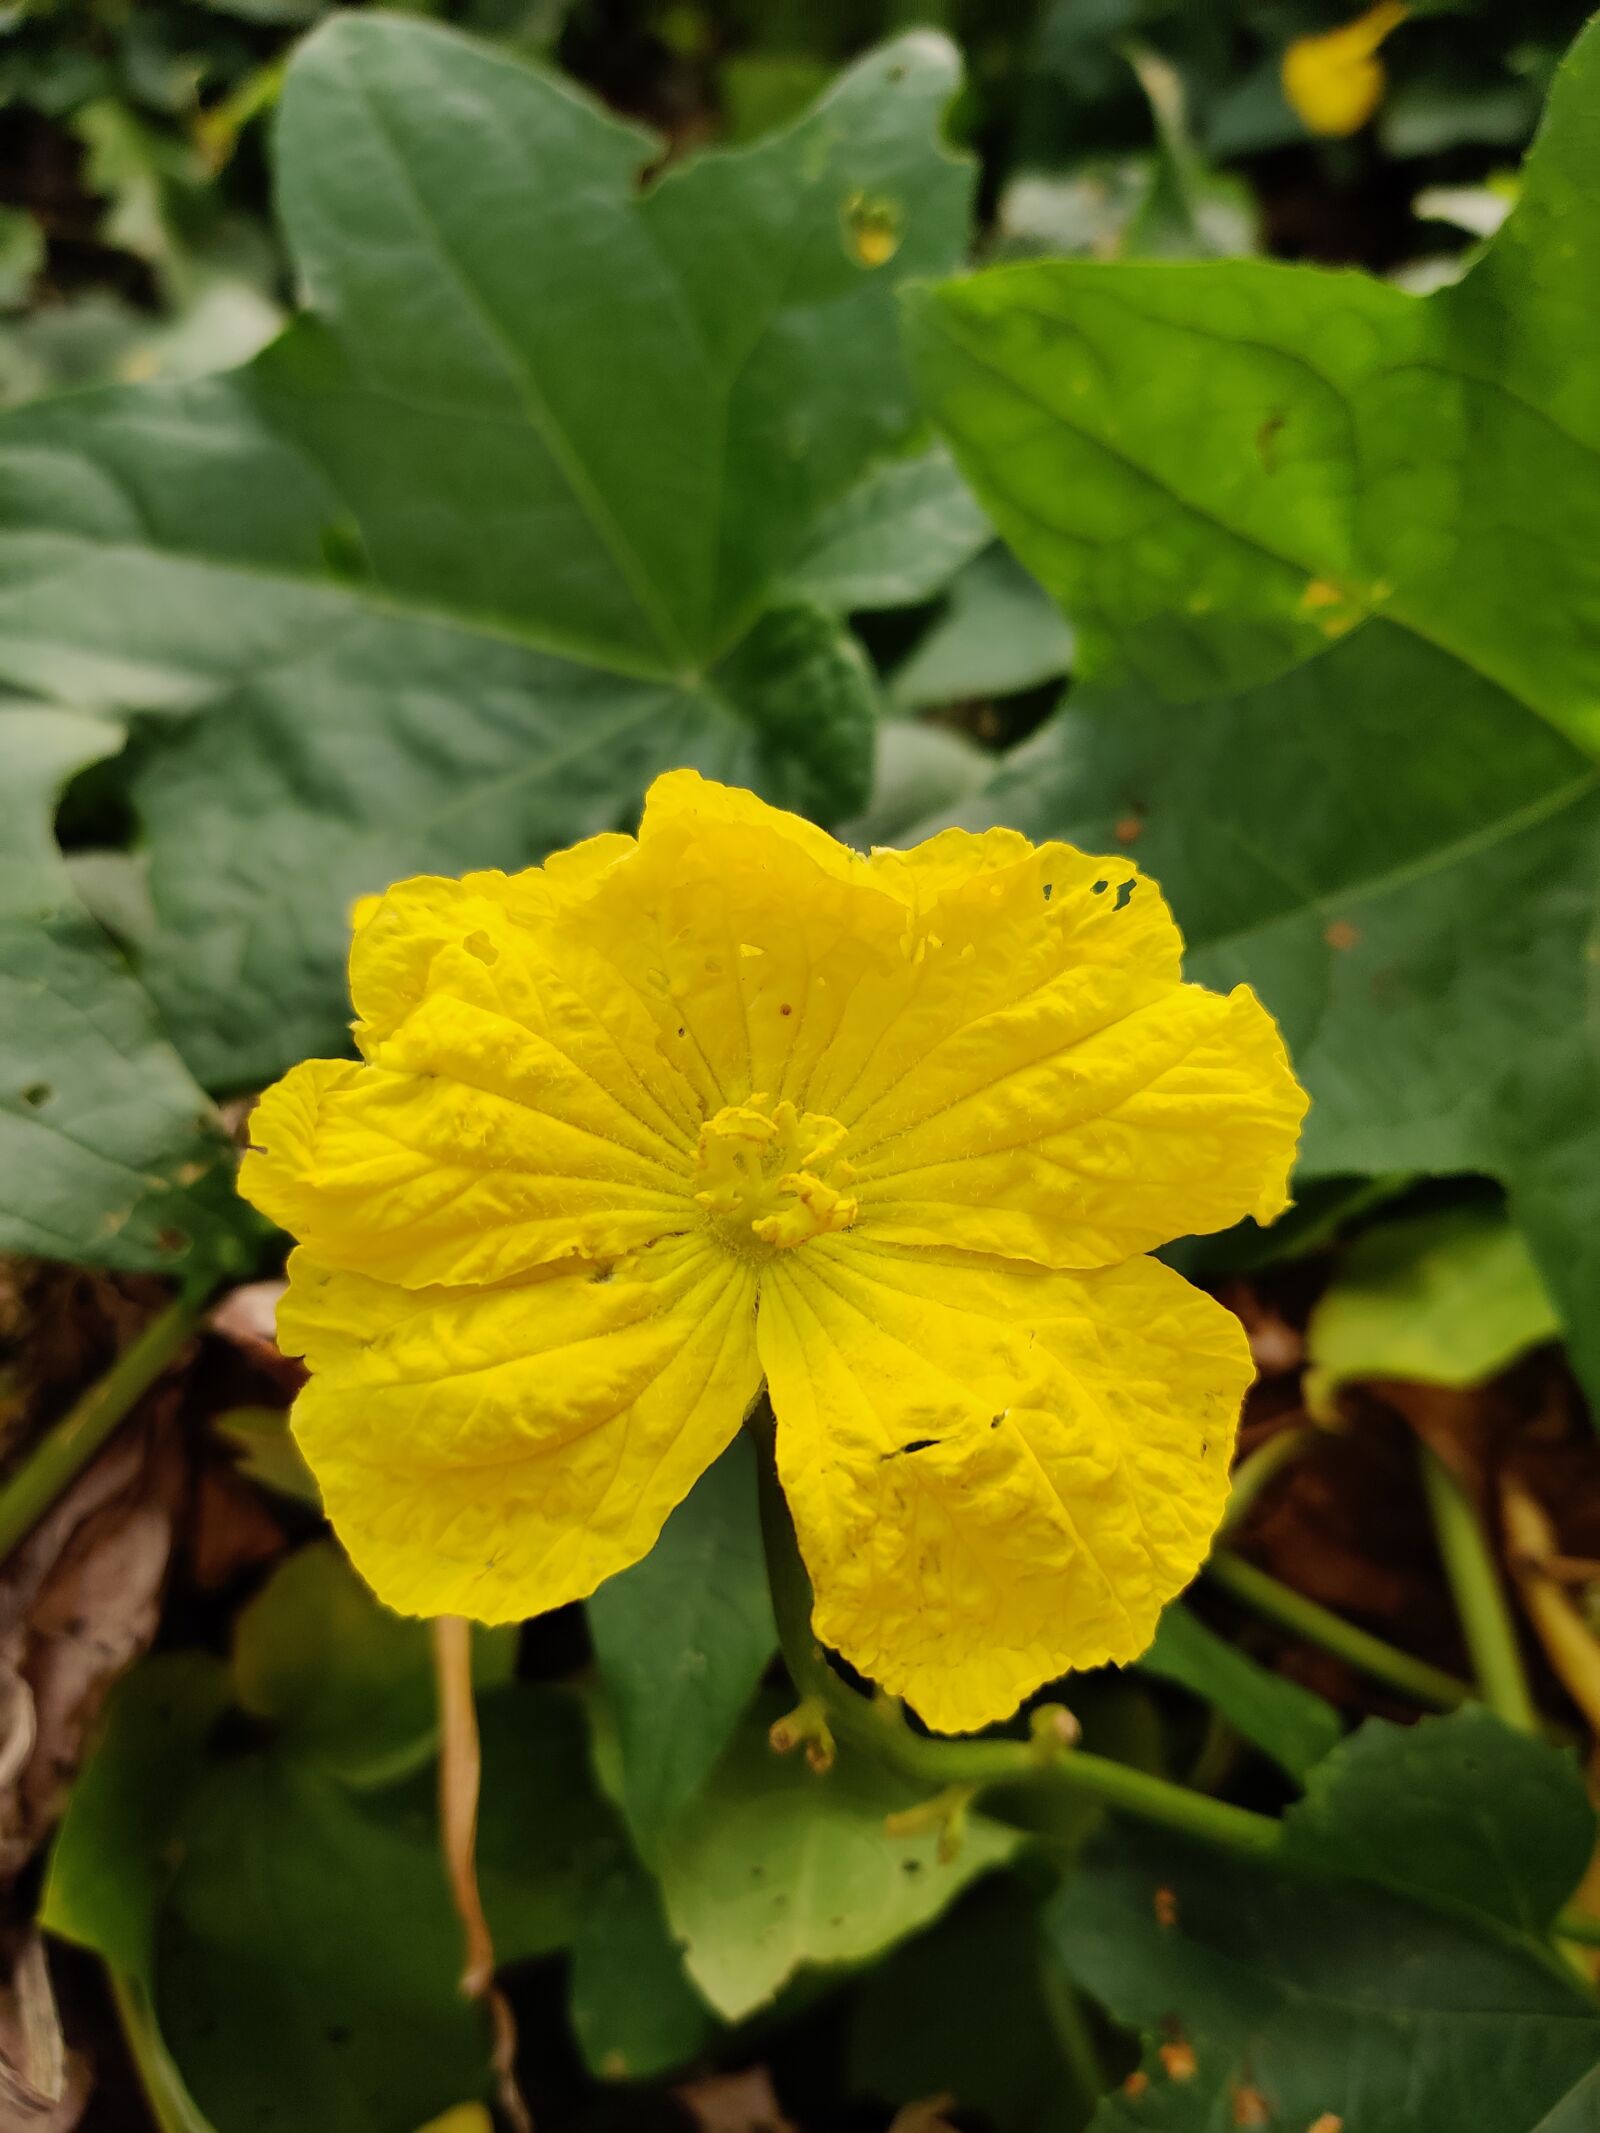 OnePlus HD1901 sample photo. Flowers, sponge gourd, yellow photography